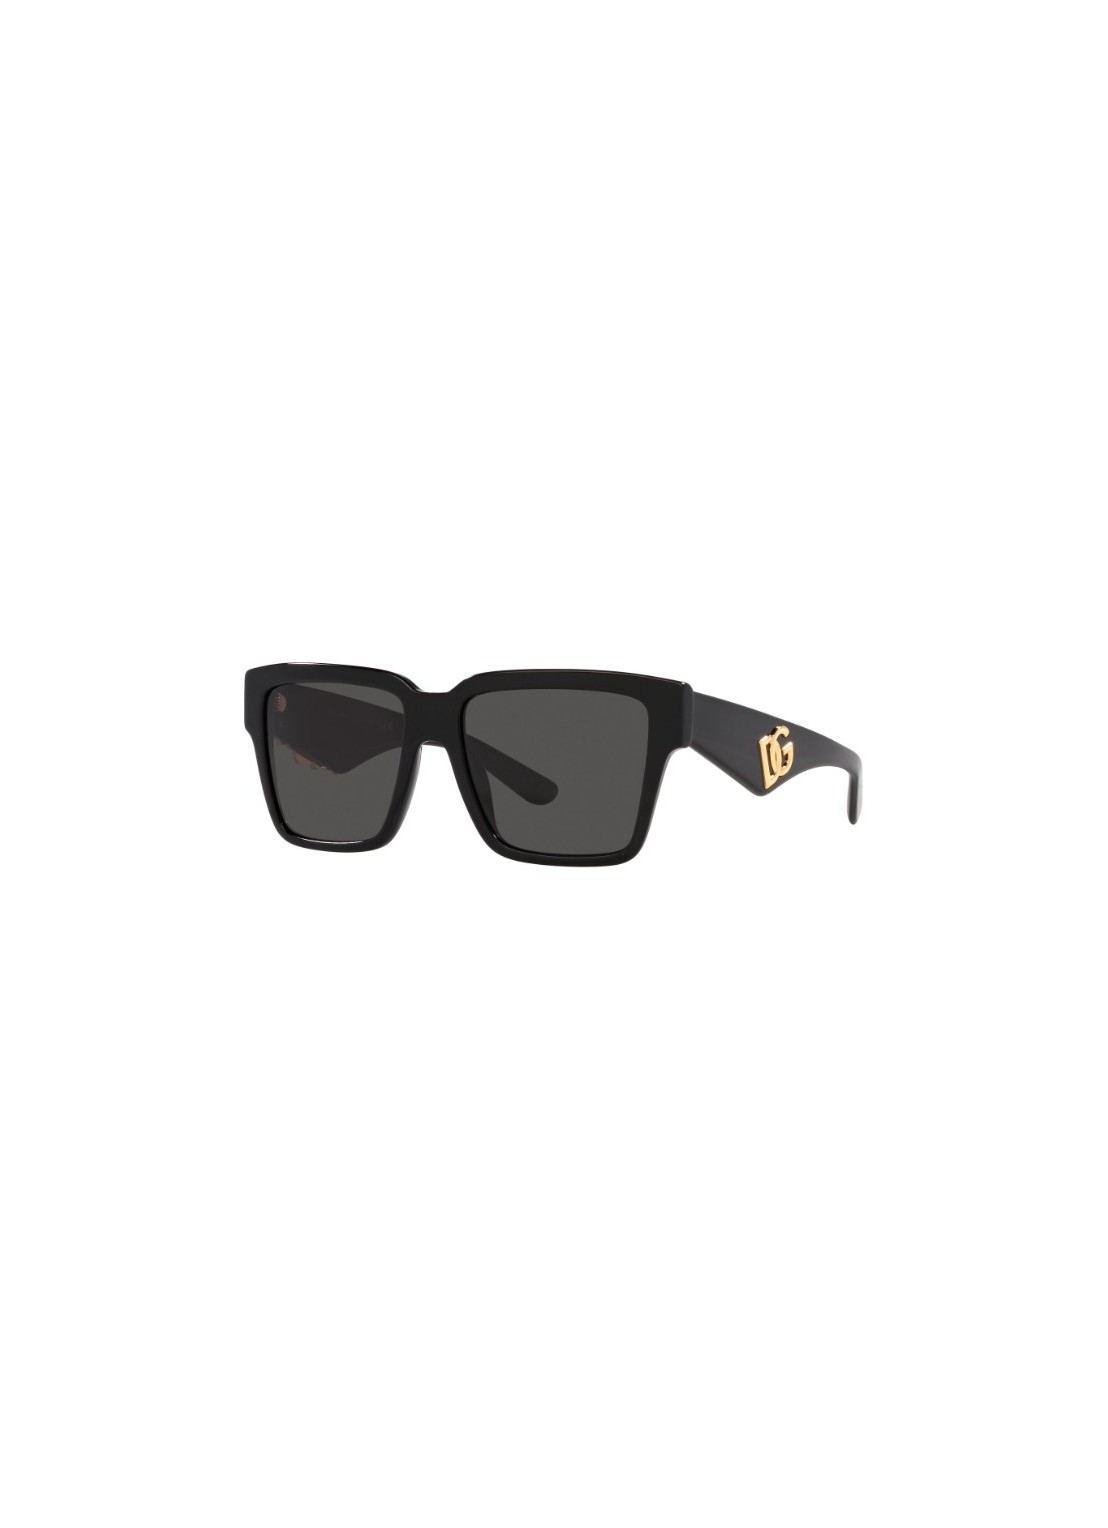 Gafas dolce&gabbana sunglasses woman 0dg4436 0dg4436 501 87 talla transparente
 